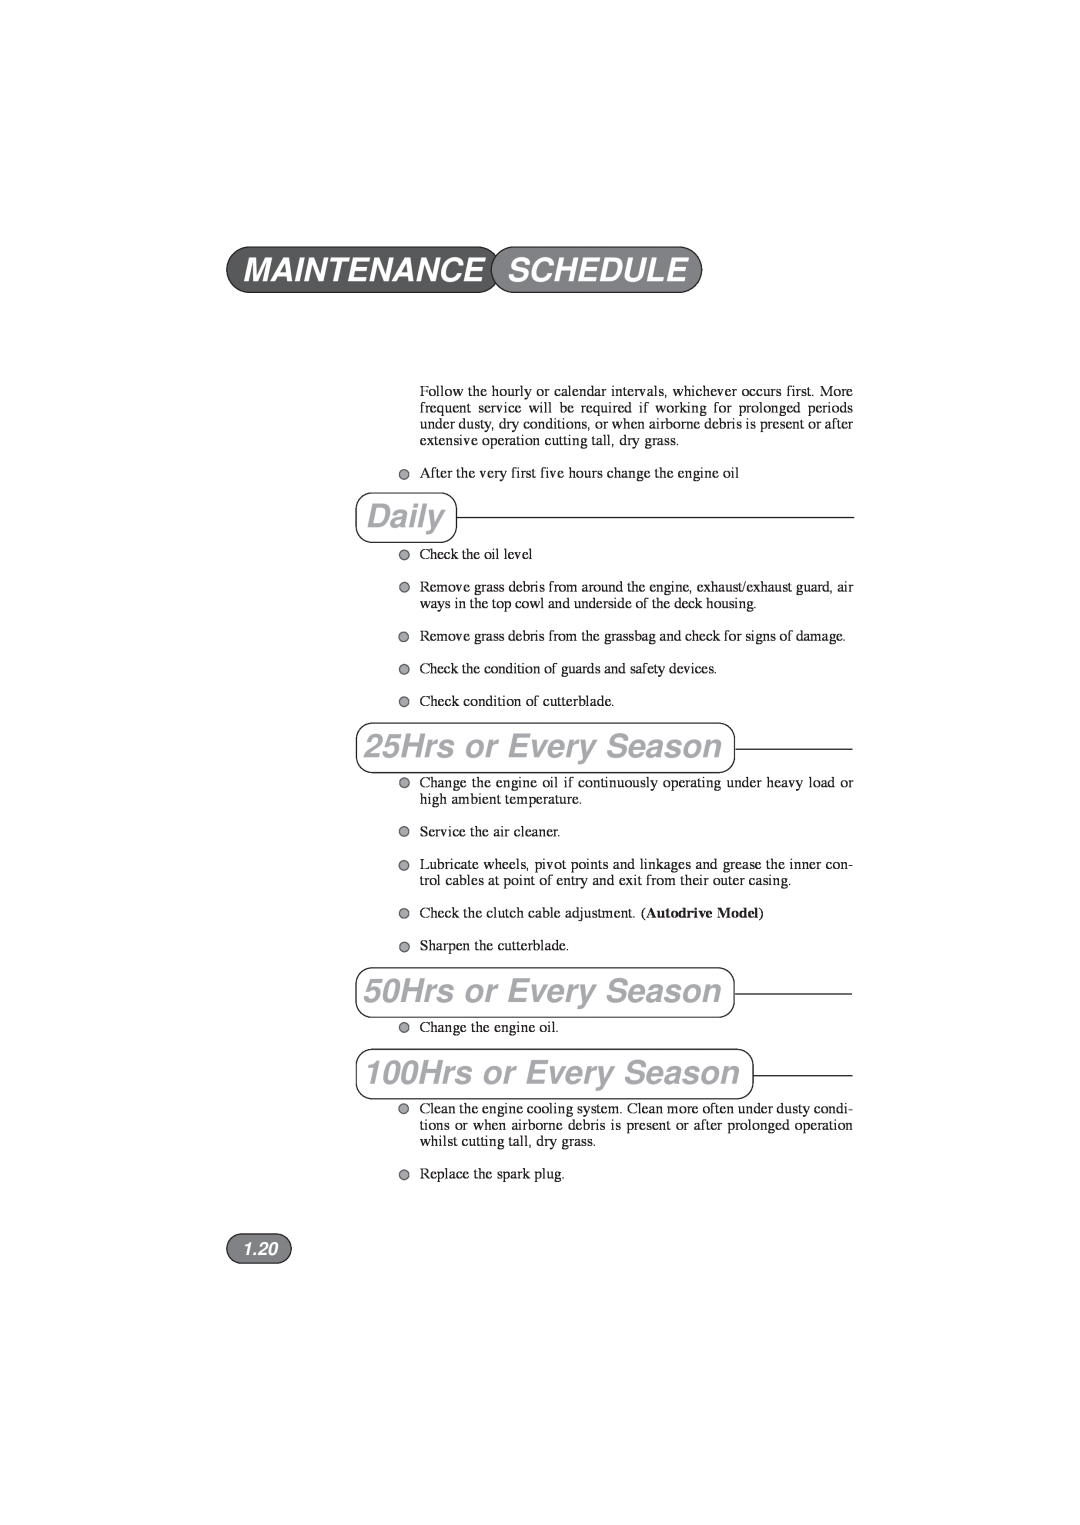 Hayter Mowers 435D Maintenance Schedule, Daily, 25Hrs or Every Season, 50Hrs or Every Season, 100Hrs or Every Season, 1.20 